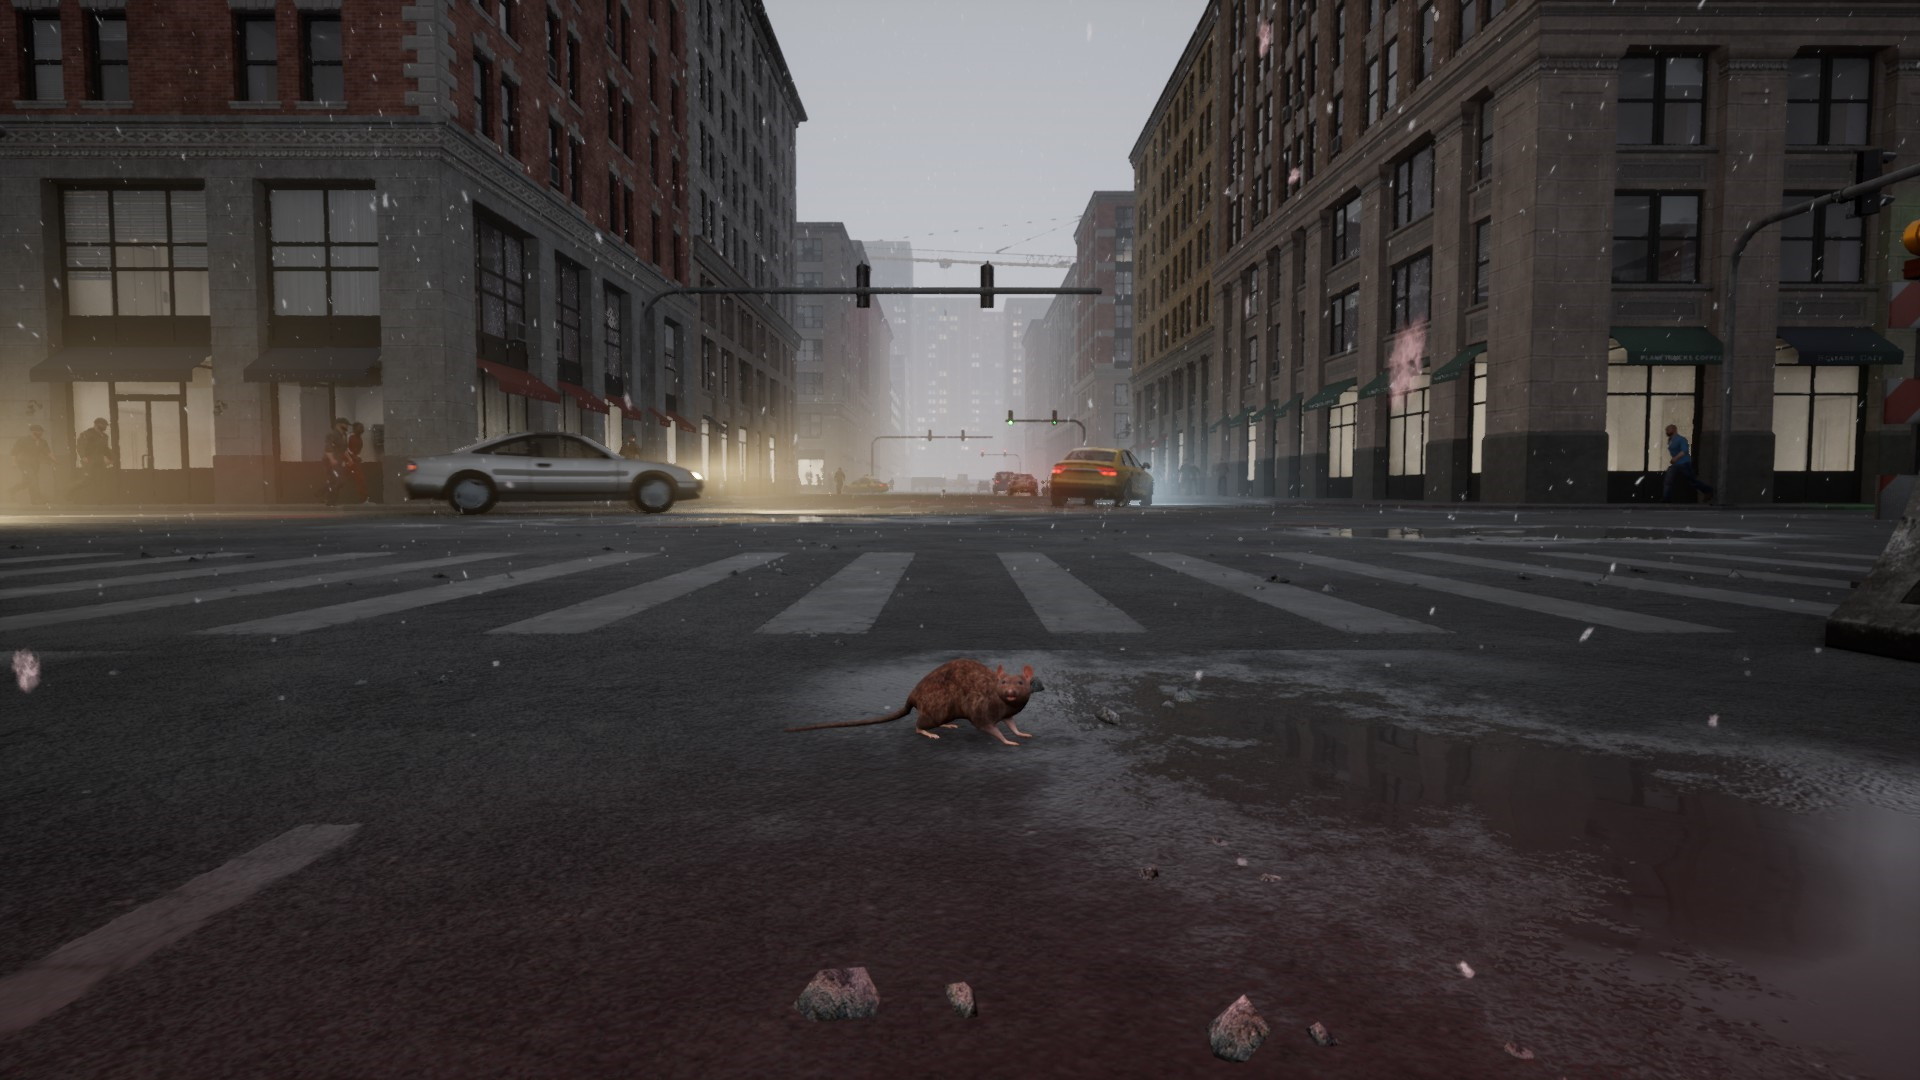 New York Rat Simulator Steam CD Key